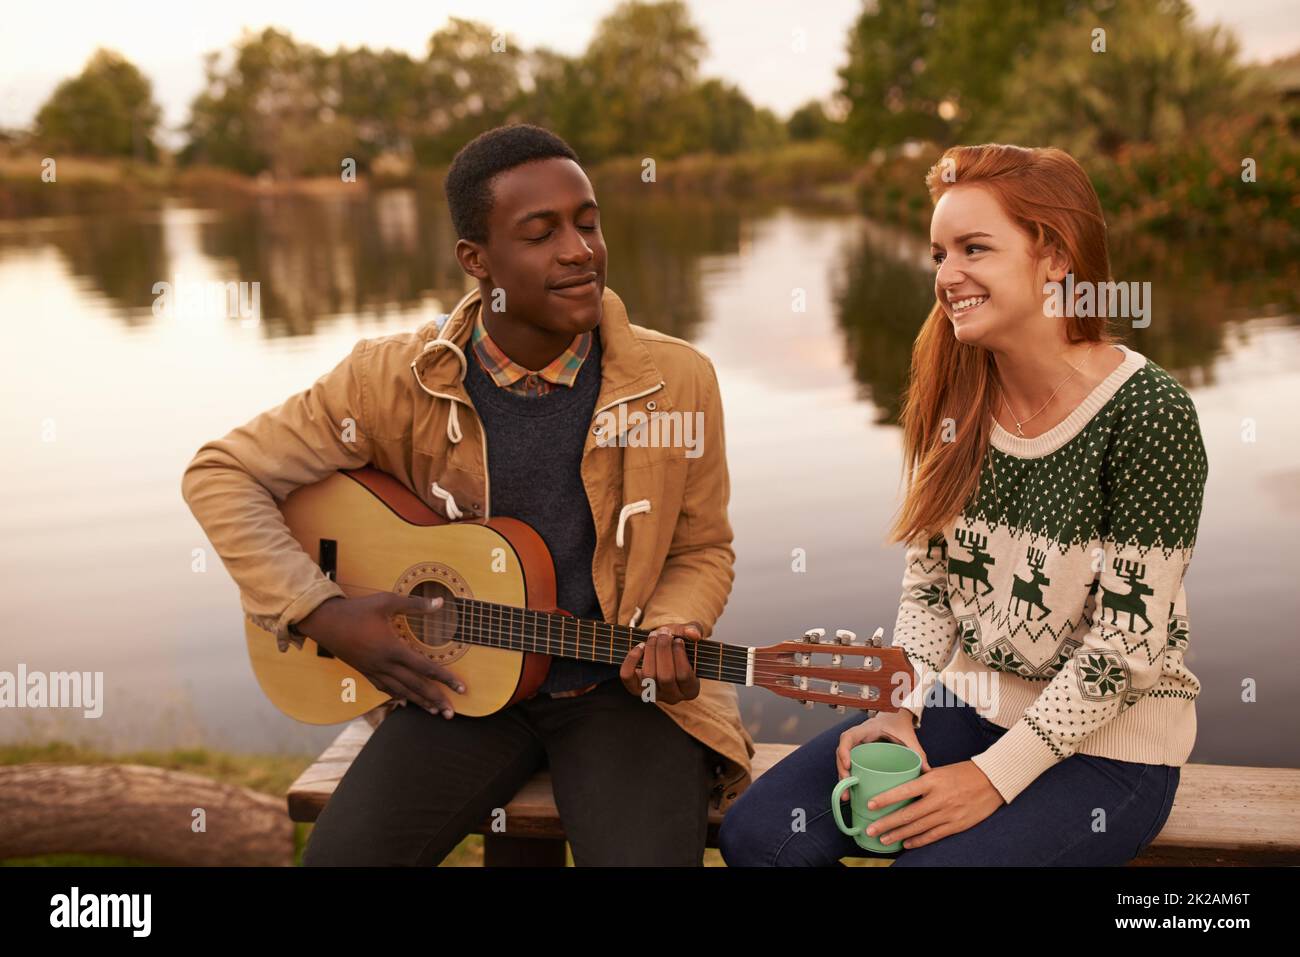 Making her blush. Shot of a teenage boy serenading a beautiful girl while sitting beside a lake. Stock Photo